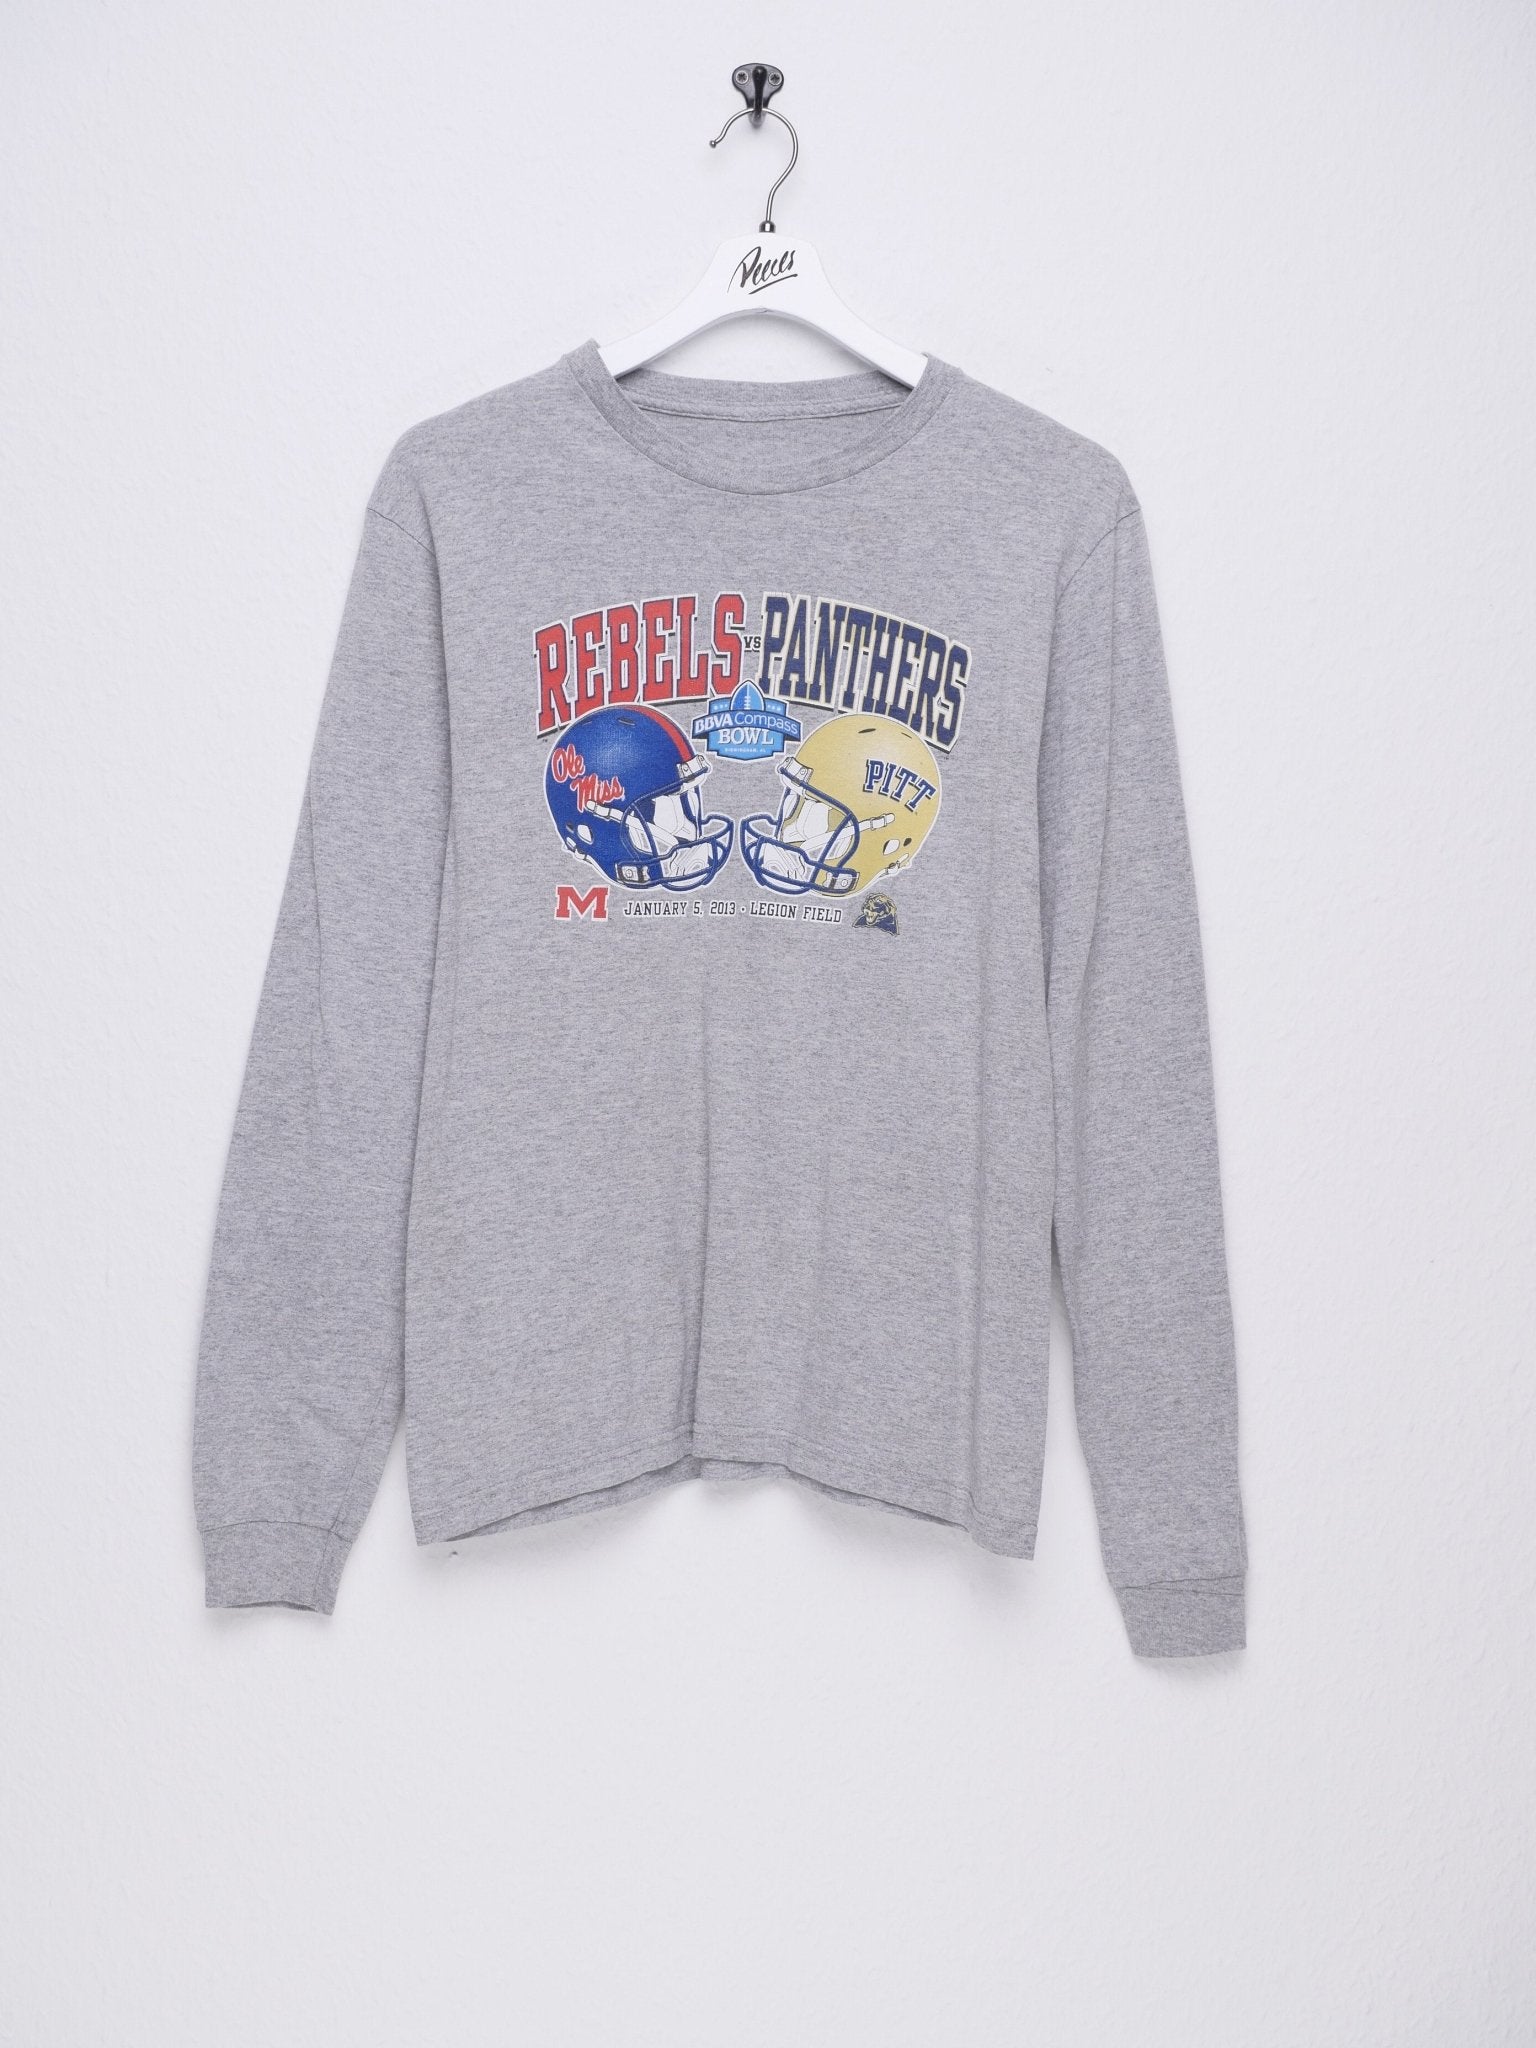 NFL printed Graphic grey L/S Shirt - Peeces